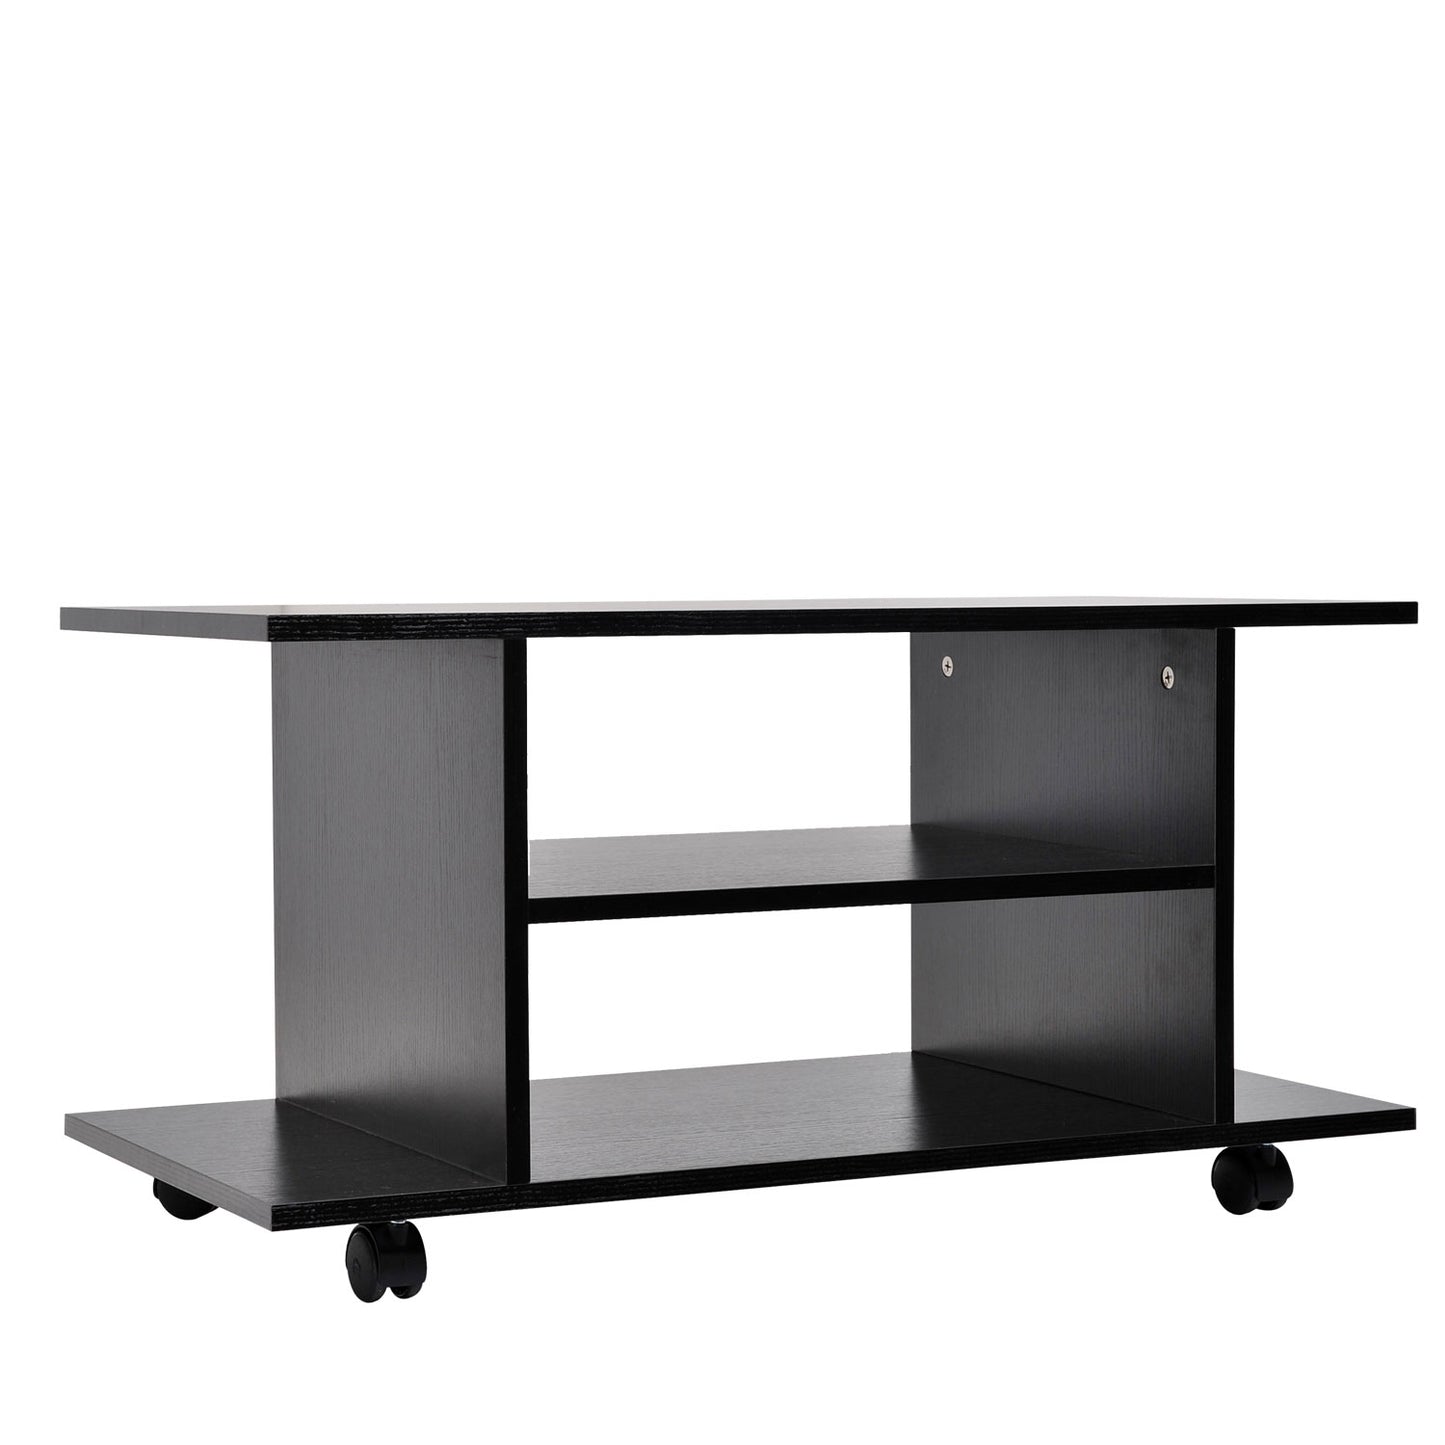 HOMCOM Modern TV Cabinet Stand Storage Shelves Table Bookcase Black